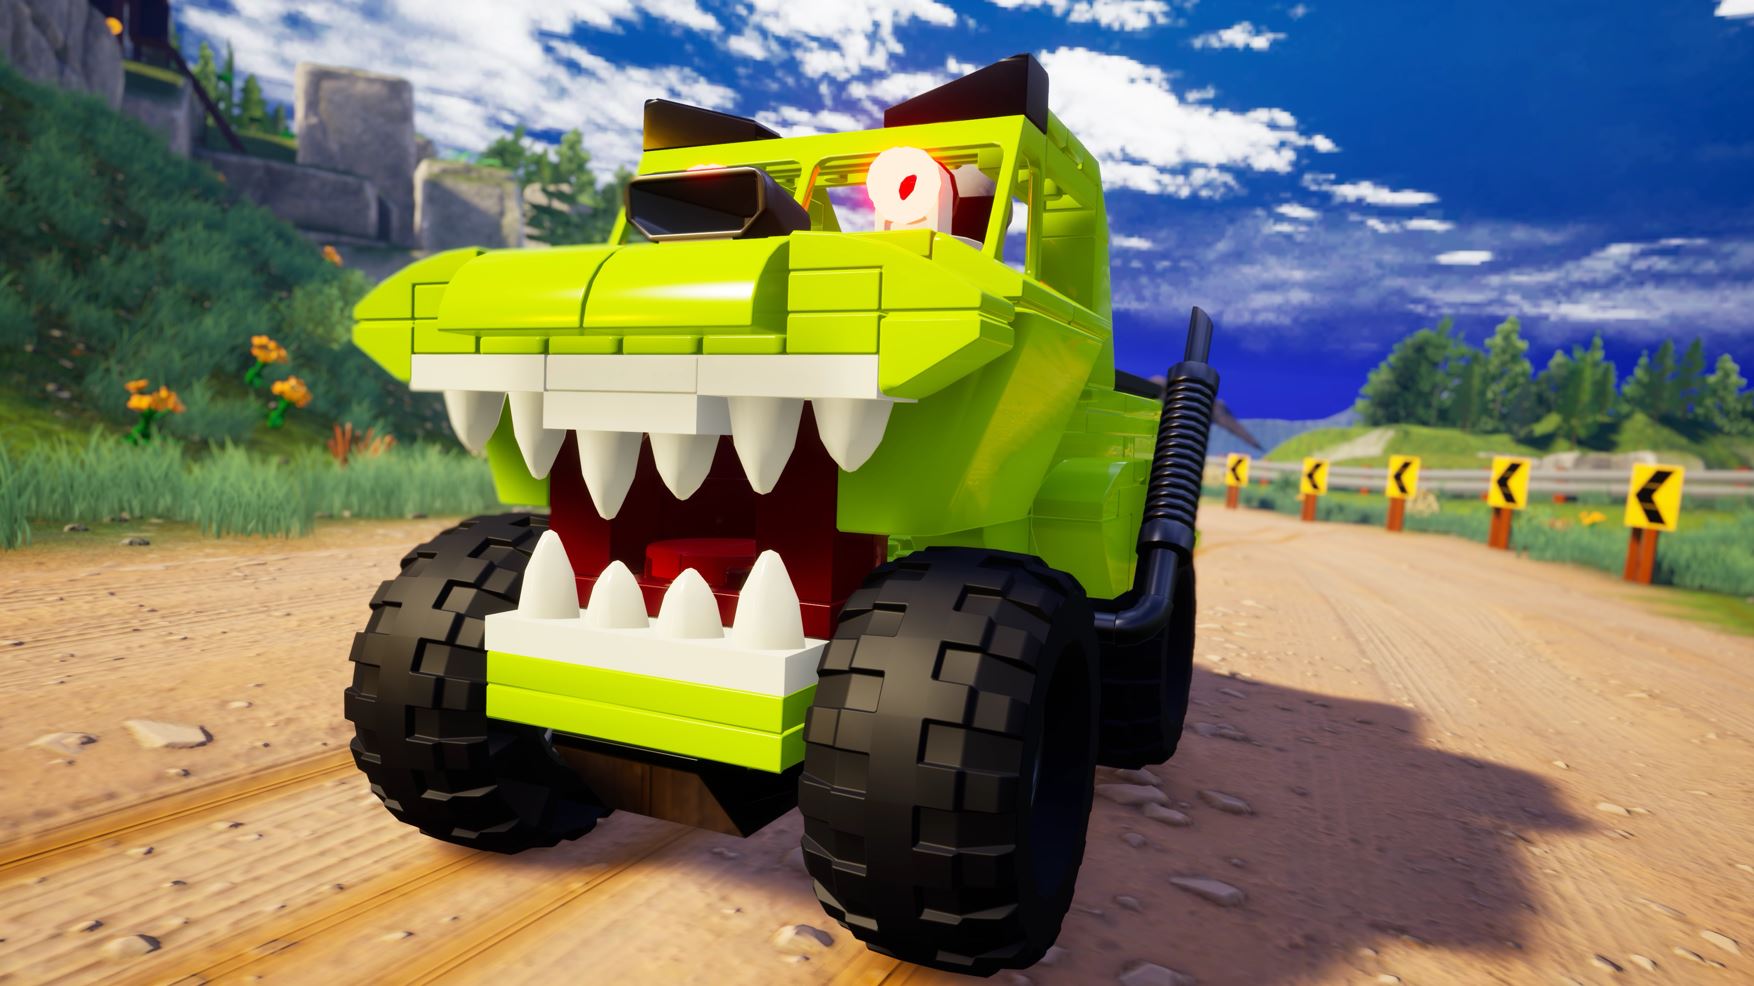 Lego 2K Drive turns Forza Horizon into a kid-friendly racer | Digital Trends